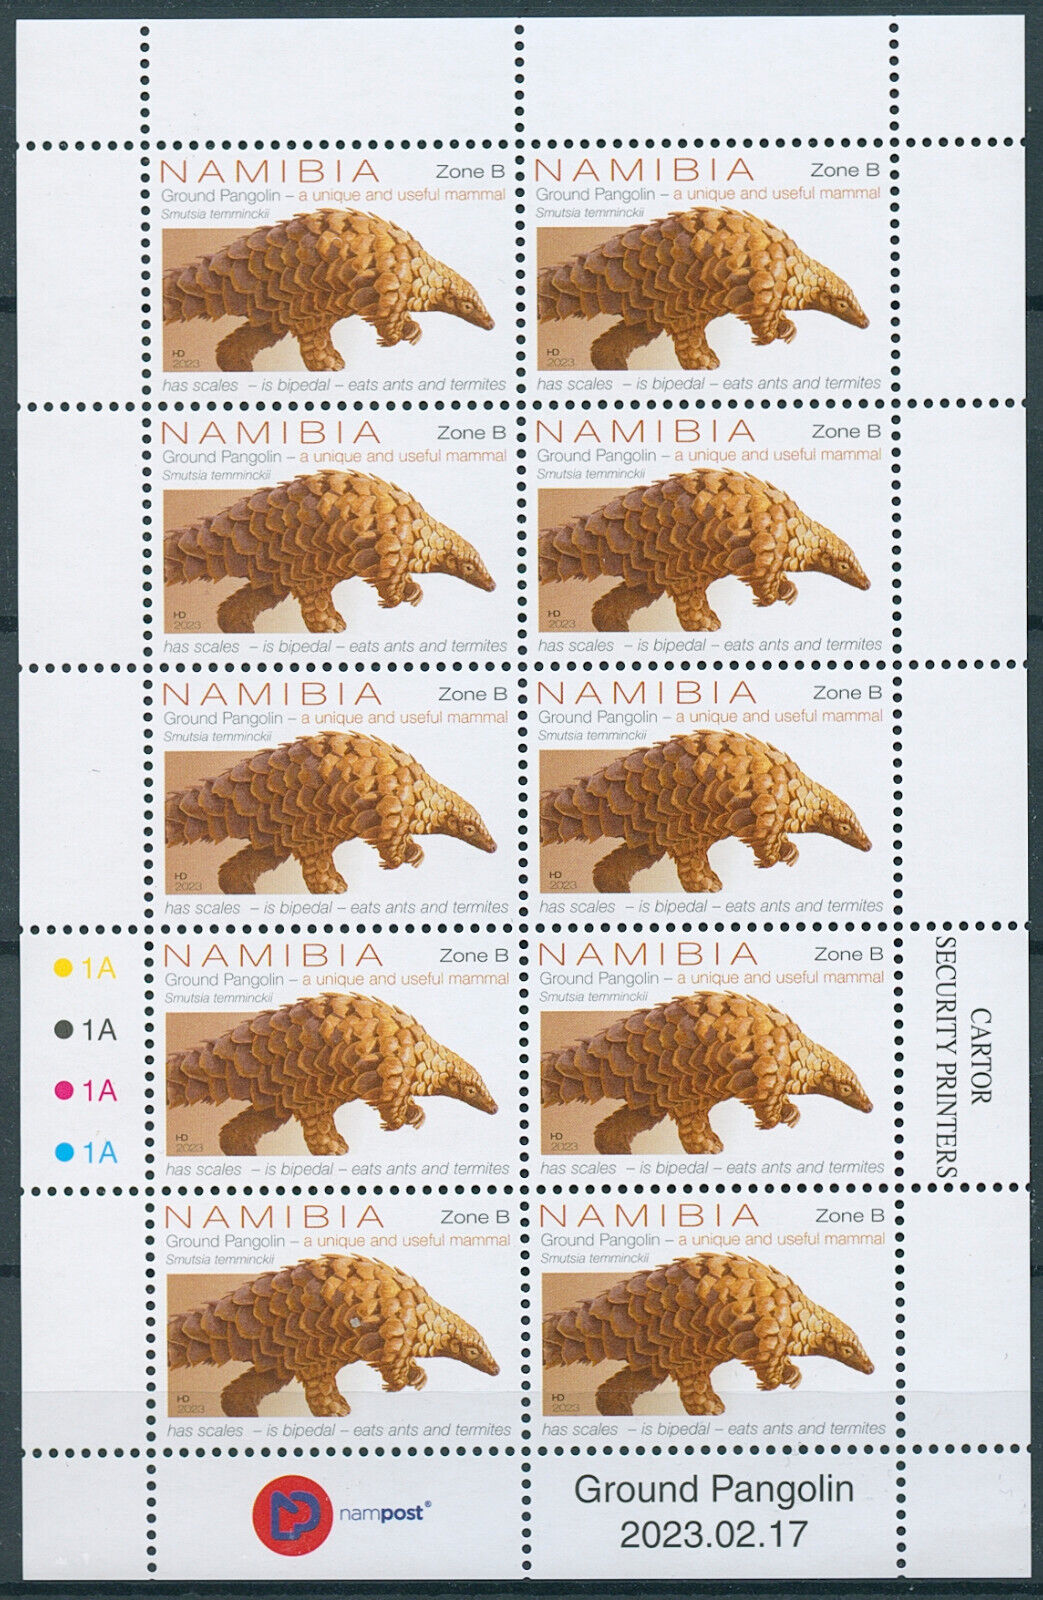 Namibia 2023 MNH Wild Animals Stamps Pangolins Ground Pangolin 3x Full Sheets